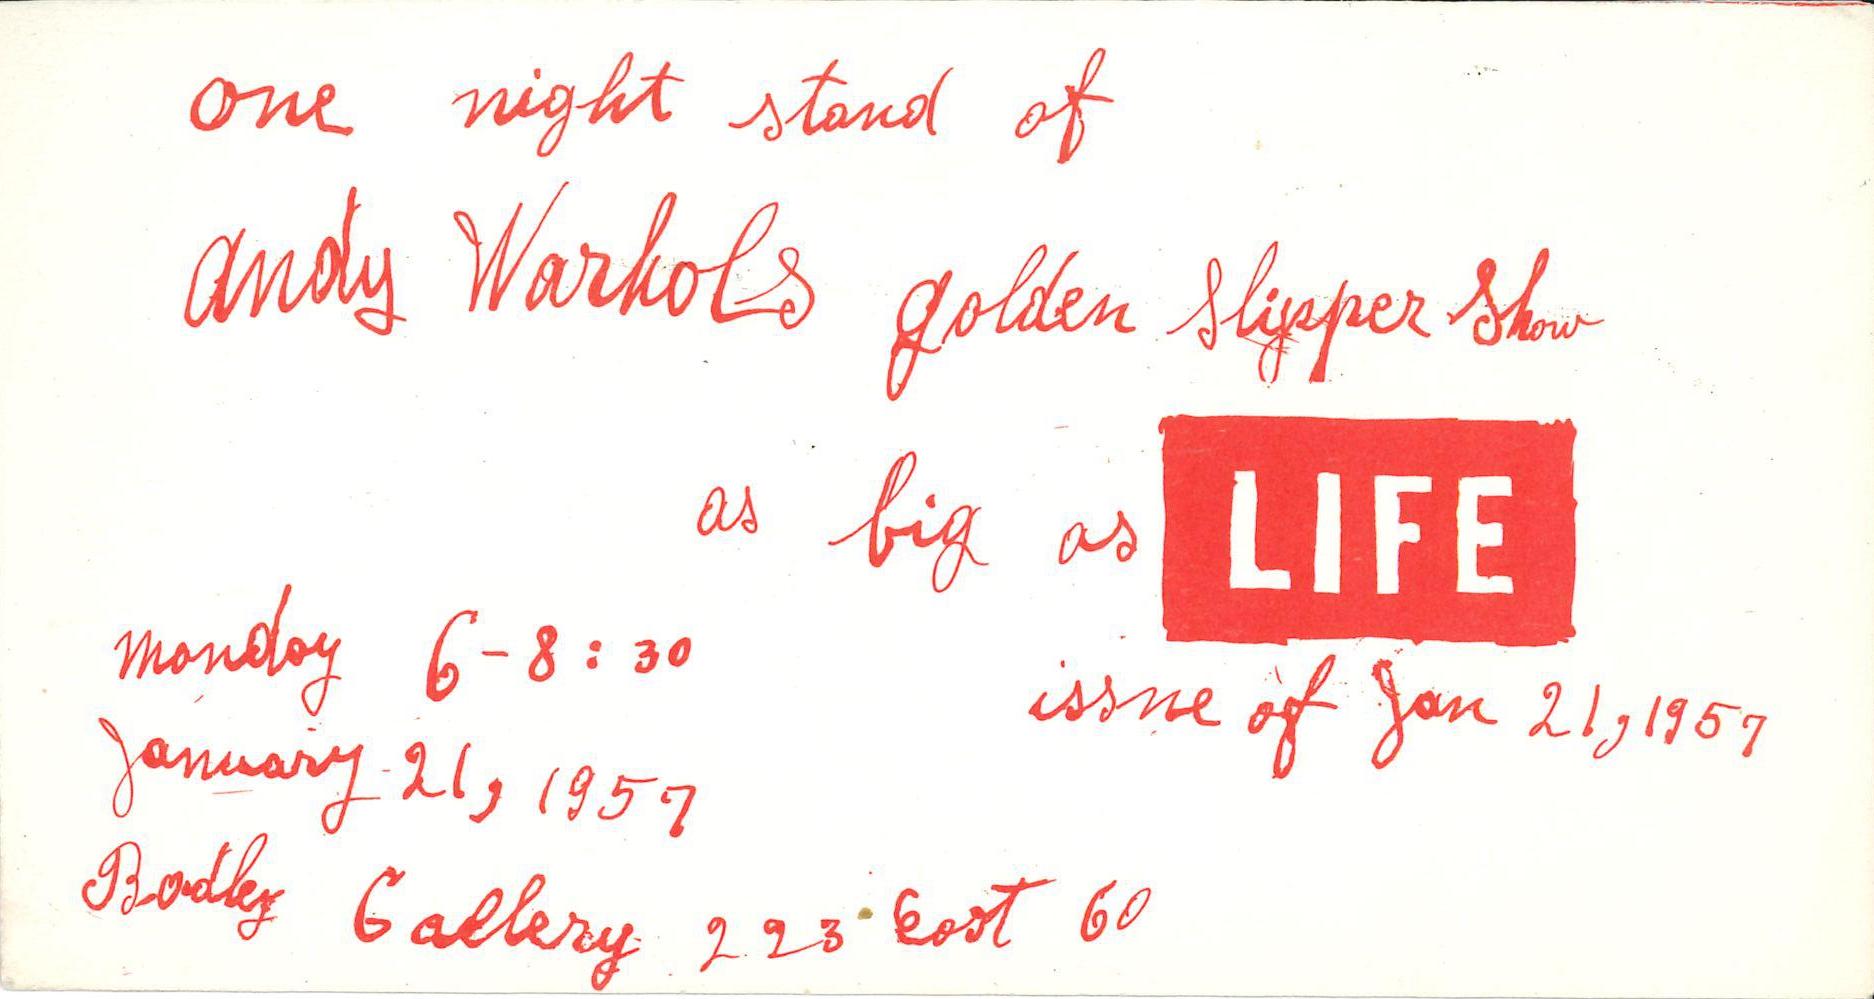 Andy Warhol. One night stand of Andy Warhol's golden slippers show as big as LIFE, 1957. Bodley Gallery, New York (Invitation); Archiv der Avantgarden, Staatliche Kunstsammlungen Dresden